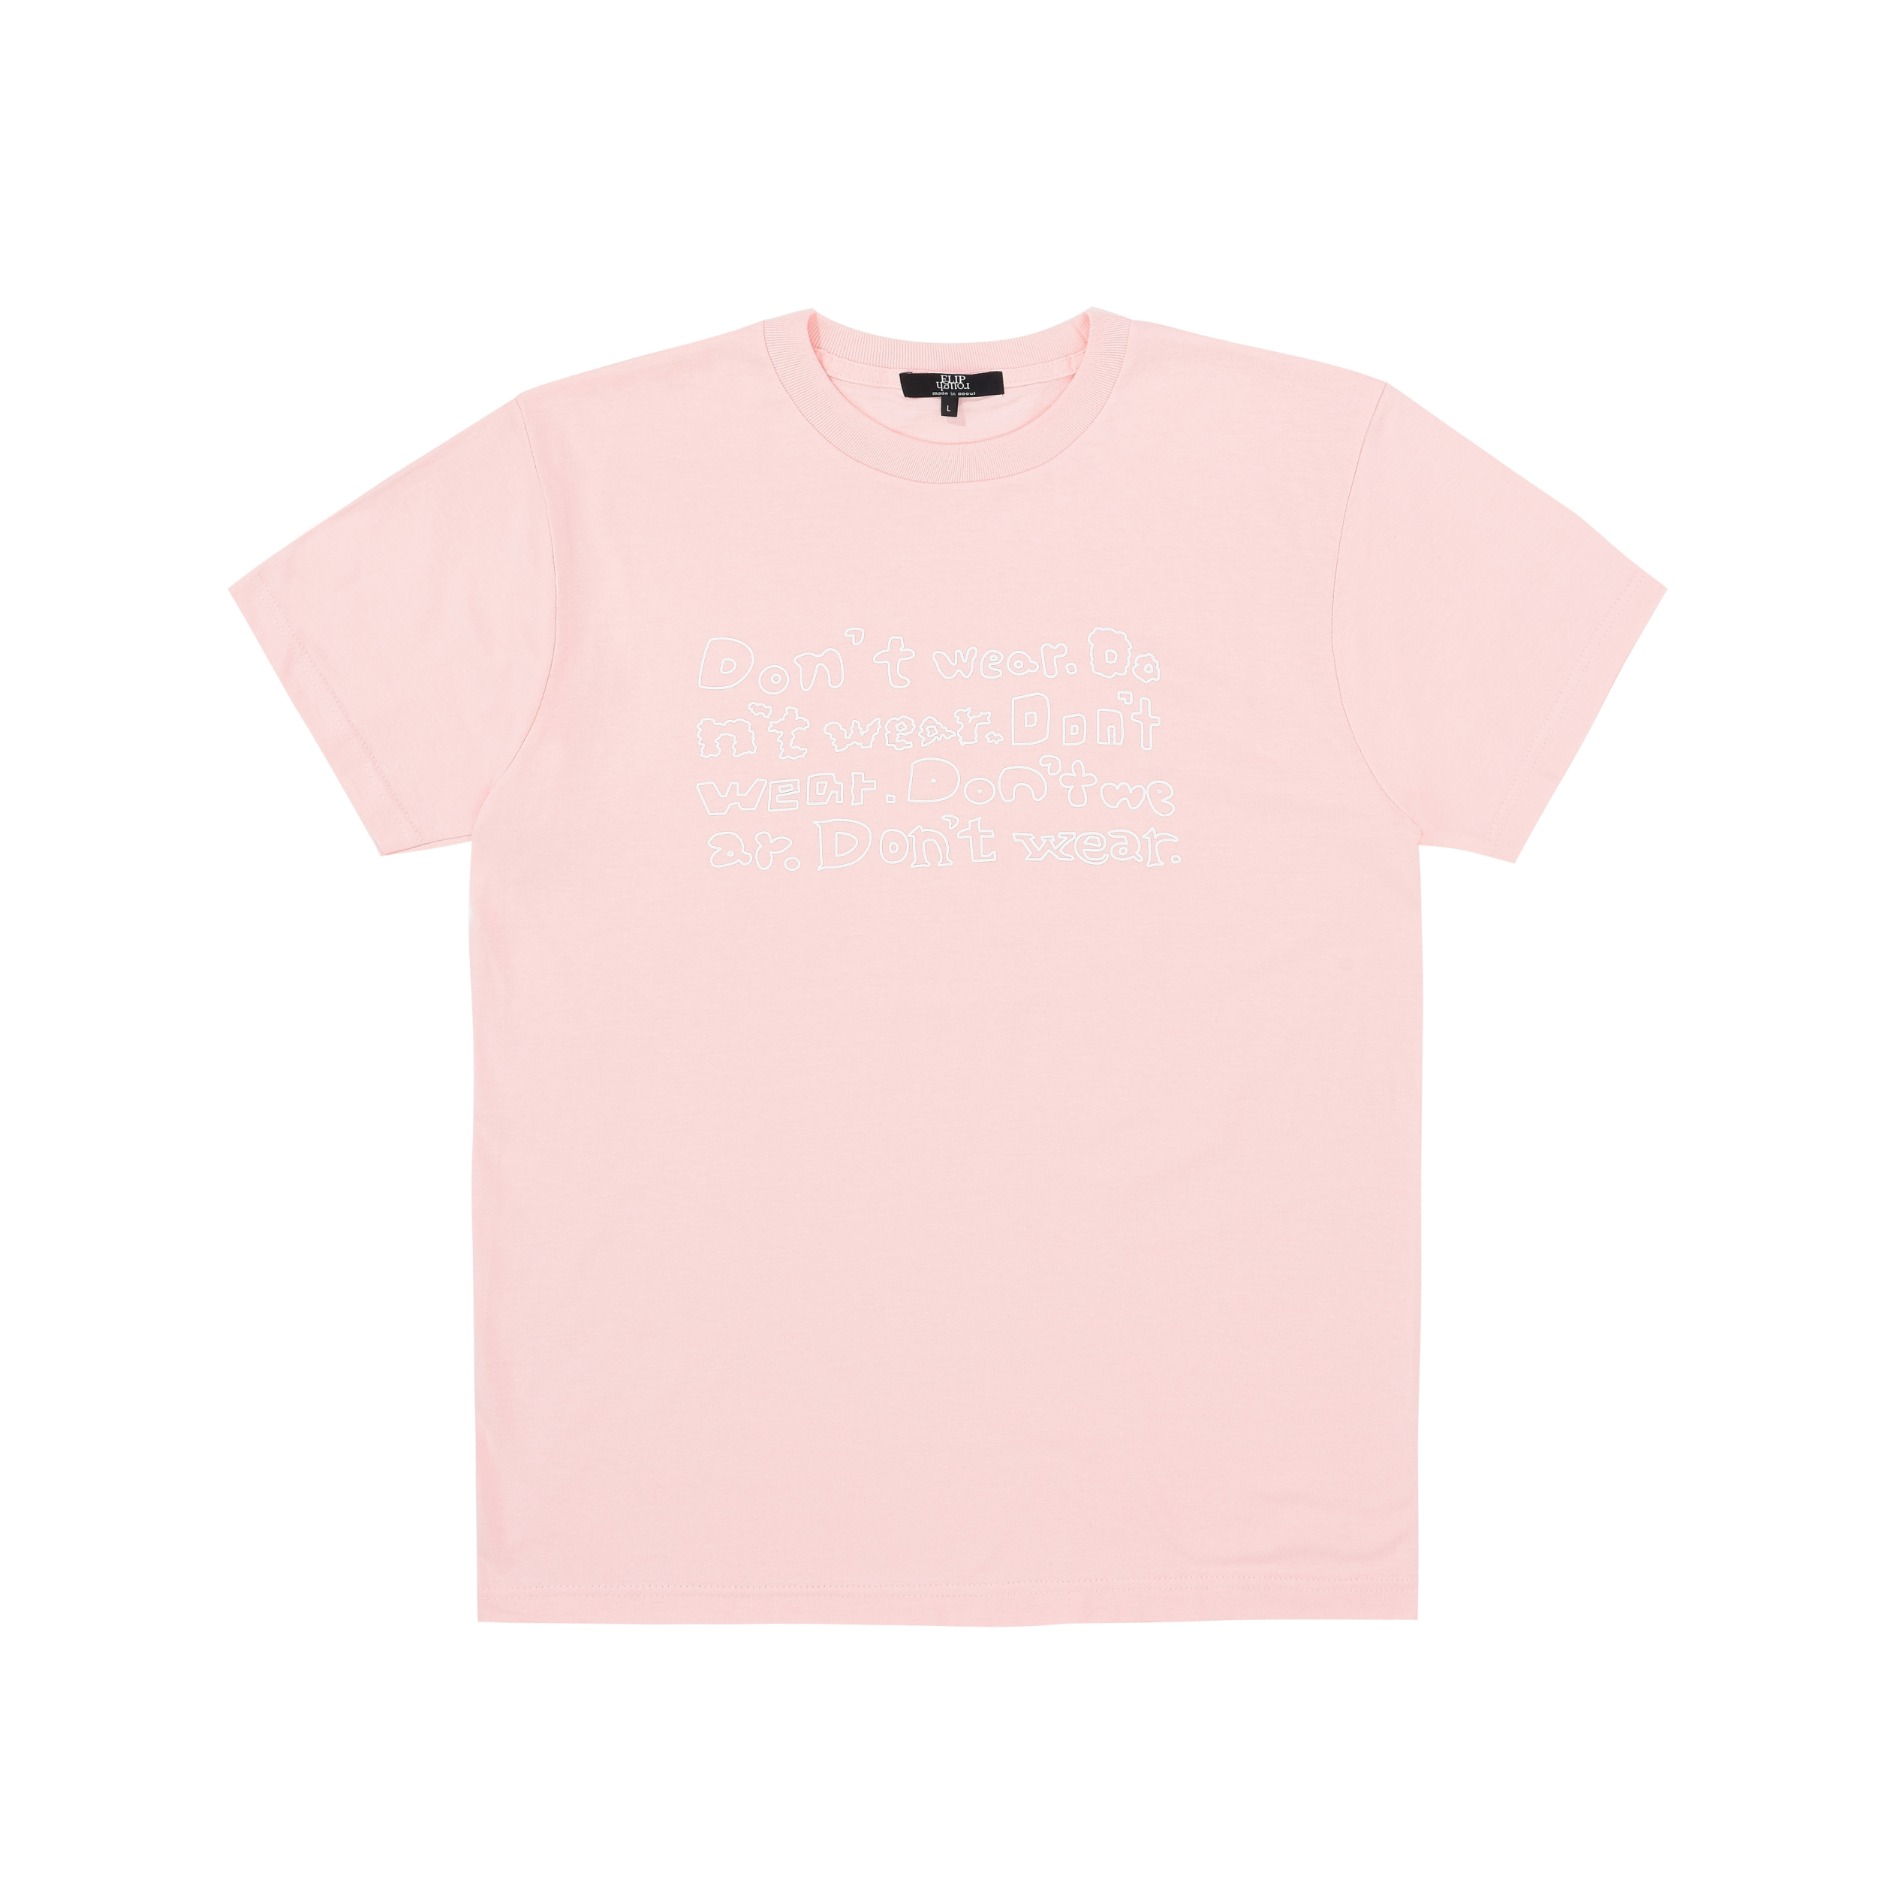 Don&#039;t wear - Light pink